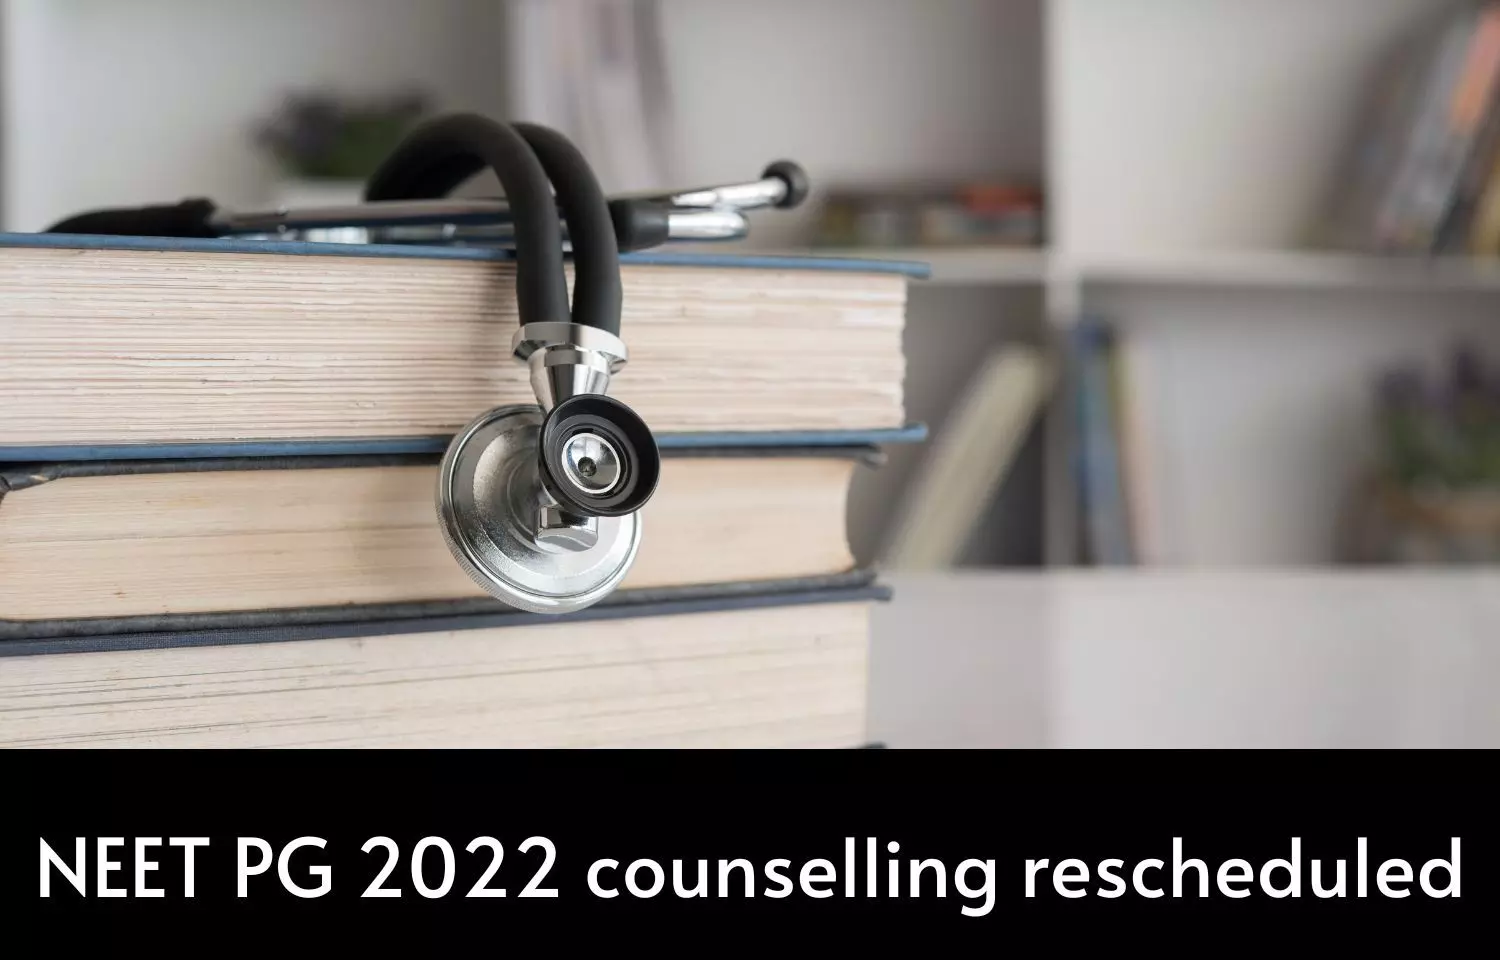 NEET PG 2022 counselling rescheduled